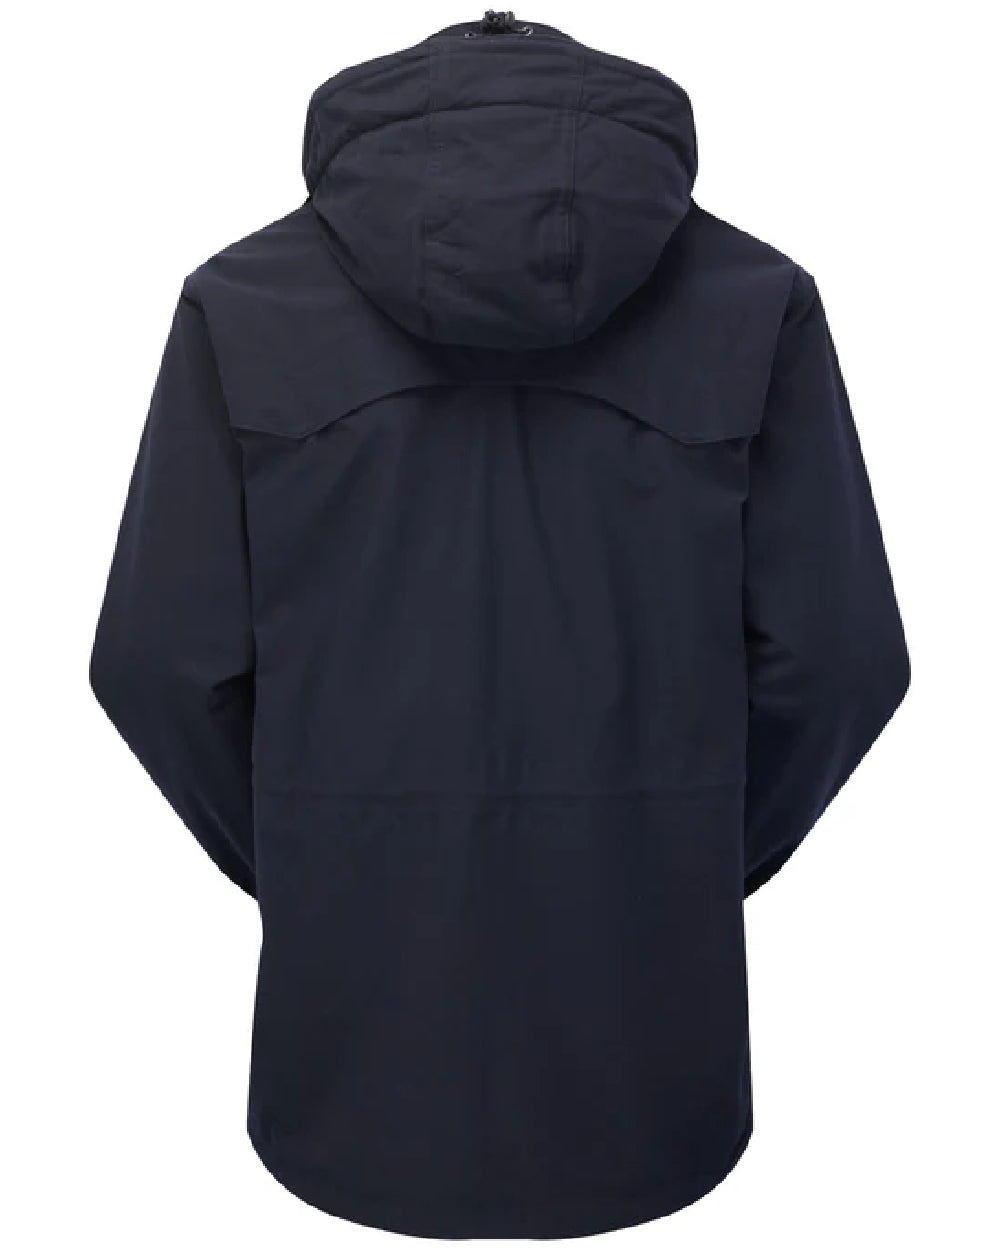 Navy coloured Ridgeline Torrent III Waterproof Jacket on white background 